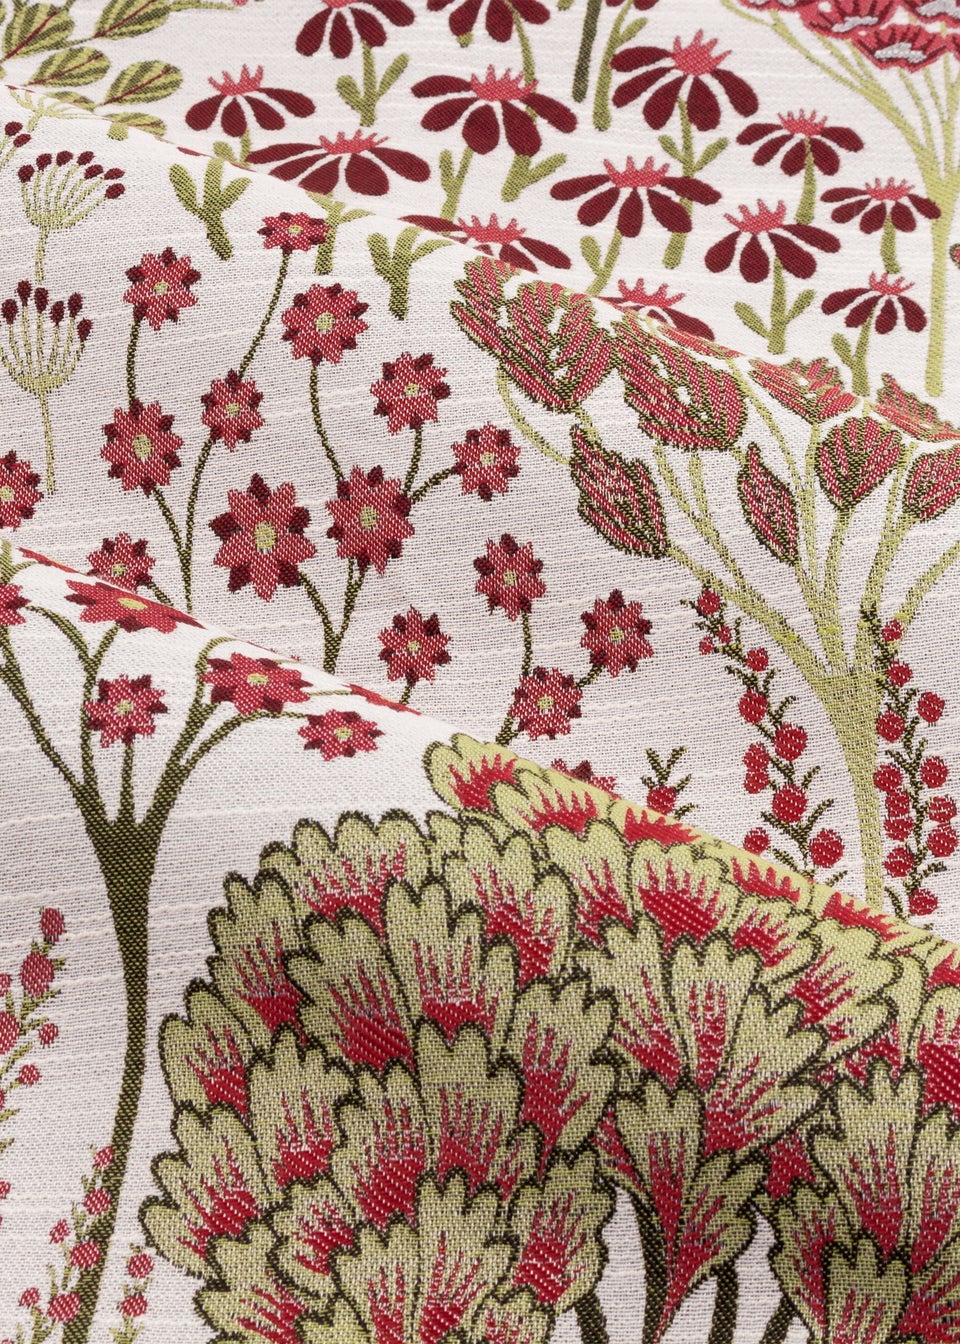 Wylder Nature Ophelia Floral Jacquard Pencil Pleat Curtains